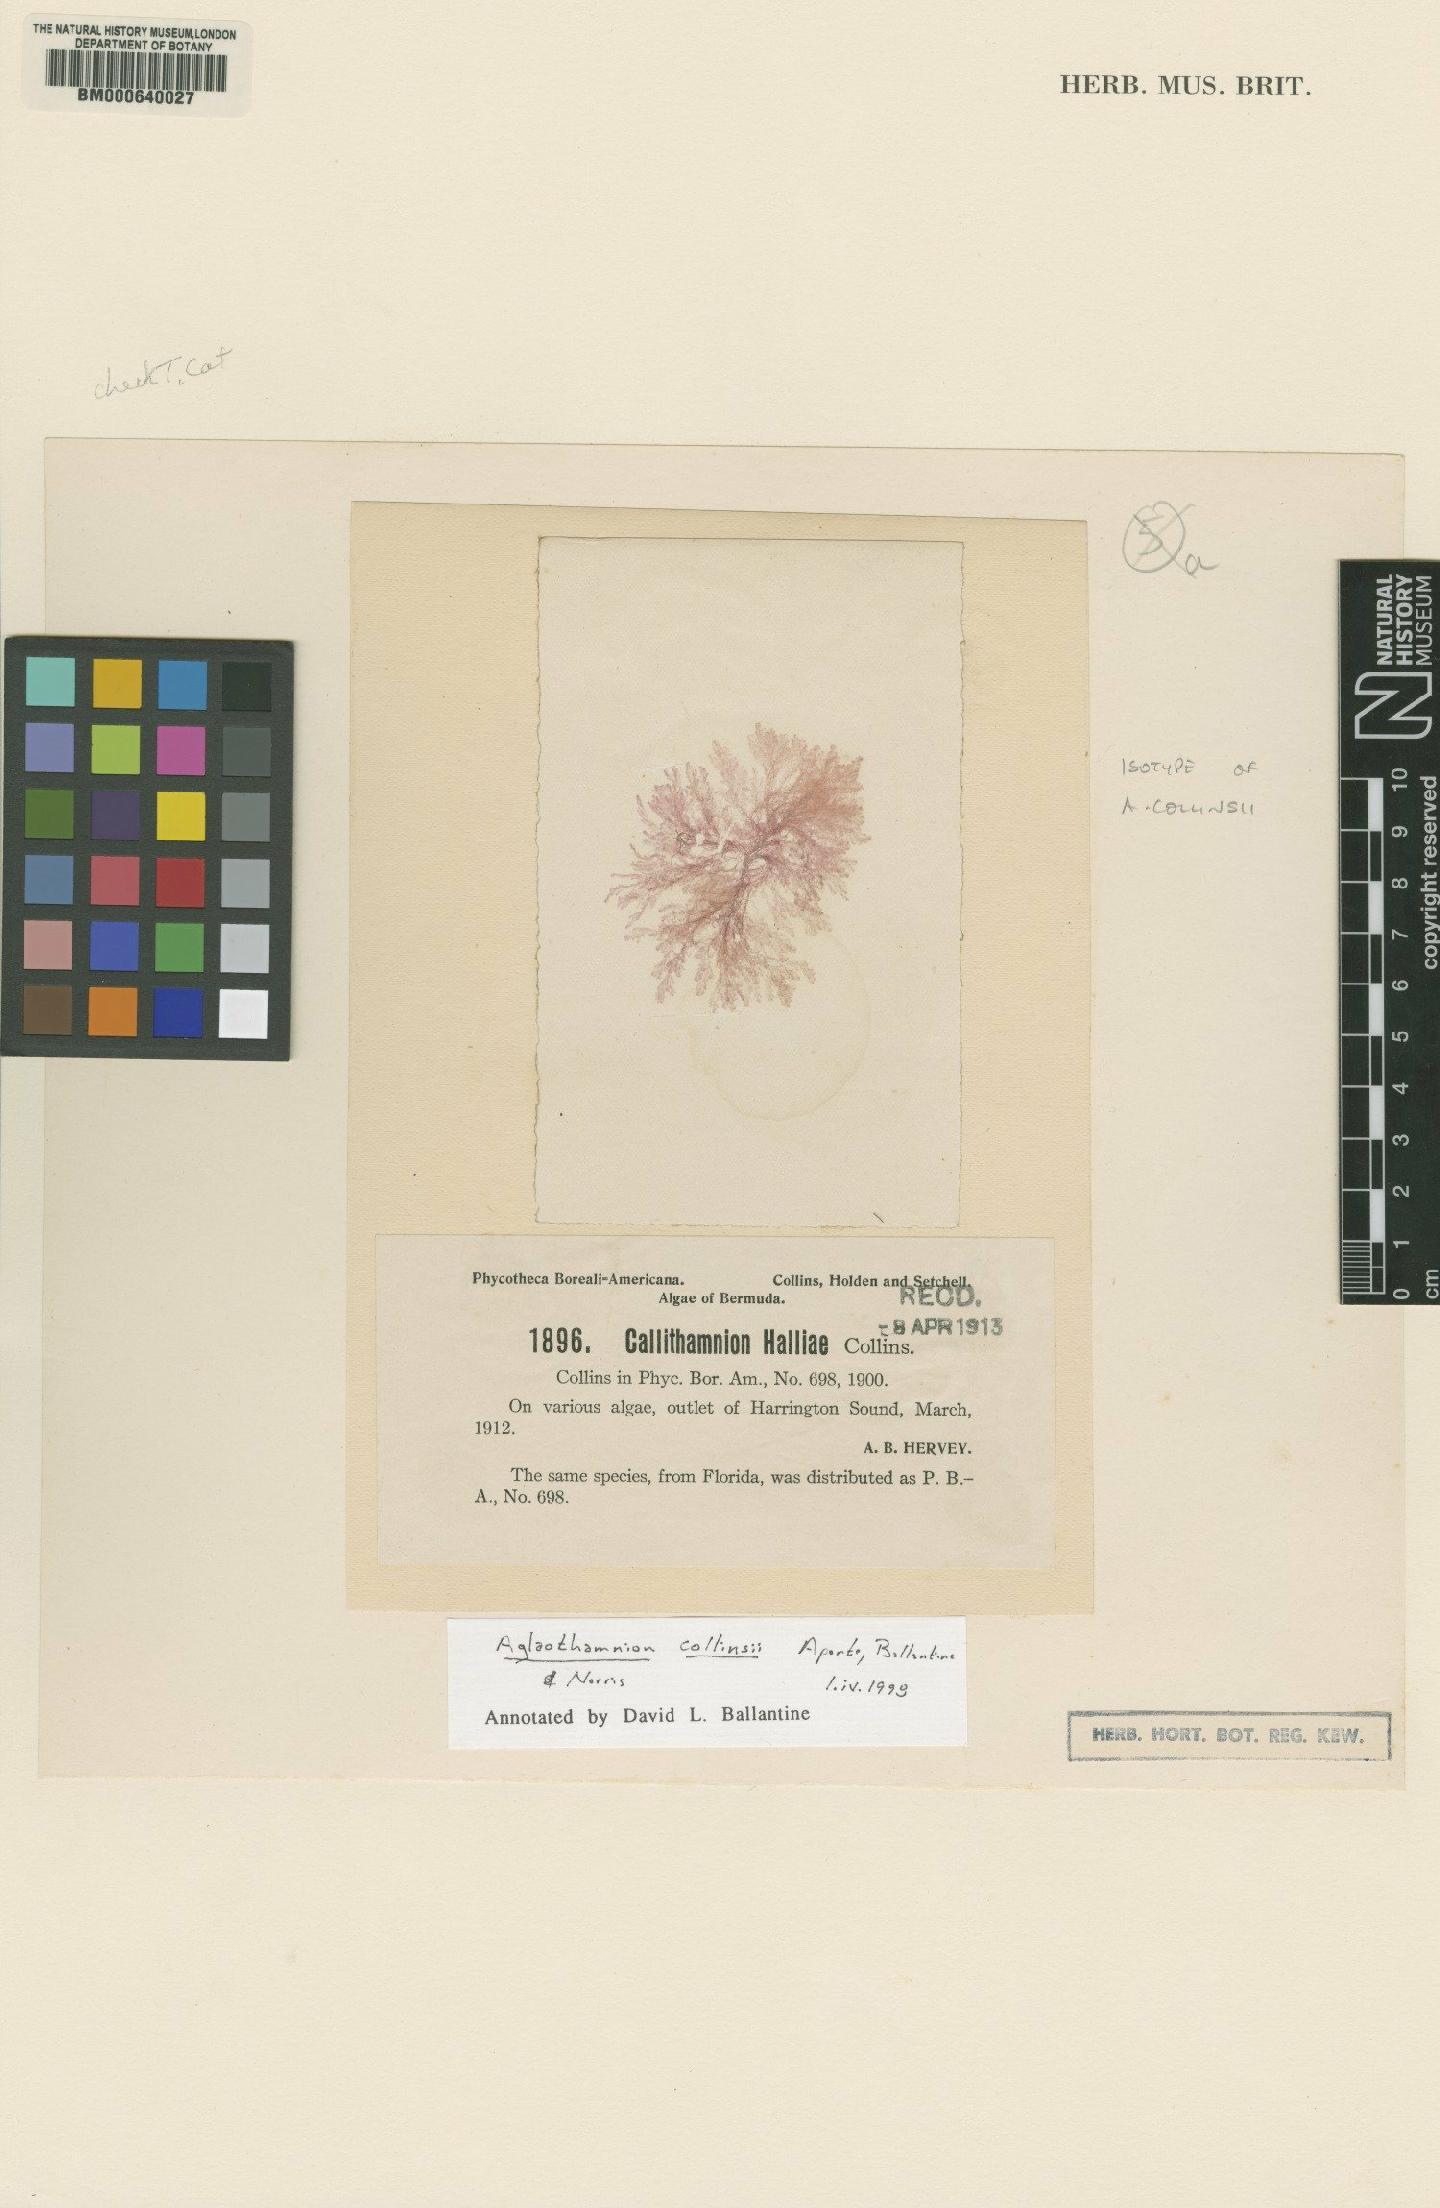 To NHMUK collection (Aglaothamnion collinsii Aponte, J.N.Norris & D.L.Ballantine; Isotype; NHMUK:ecatalogue:4792089)